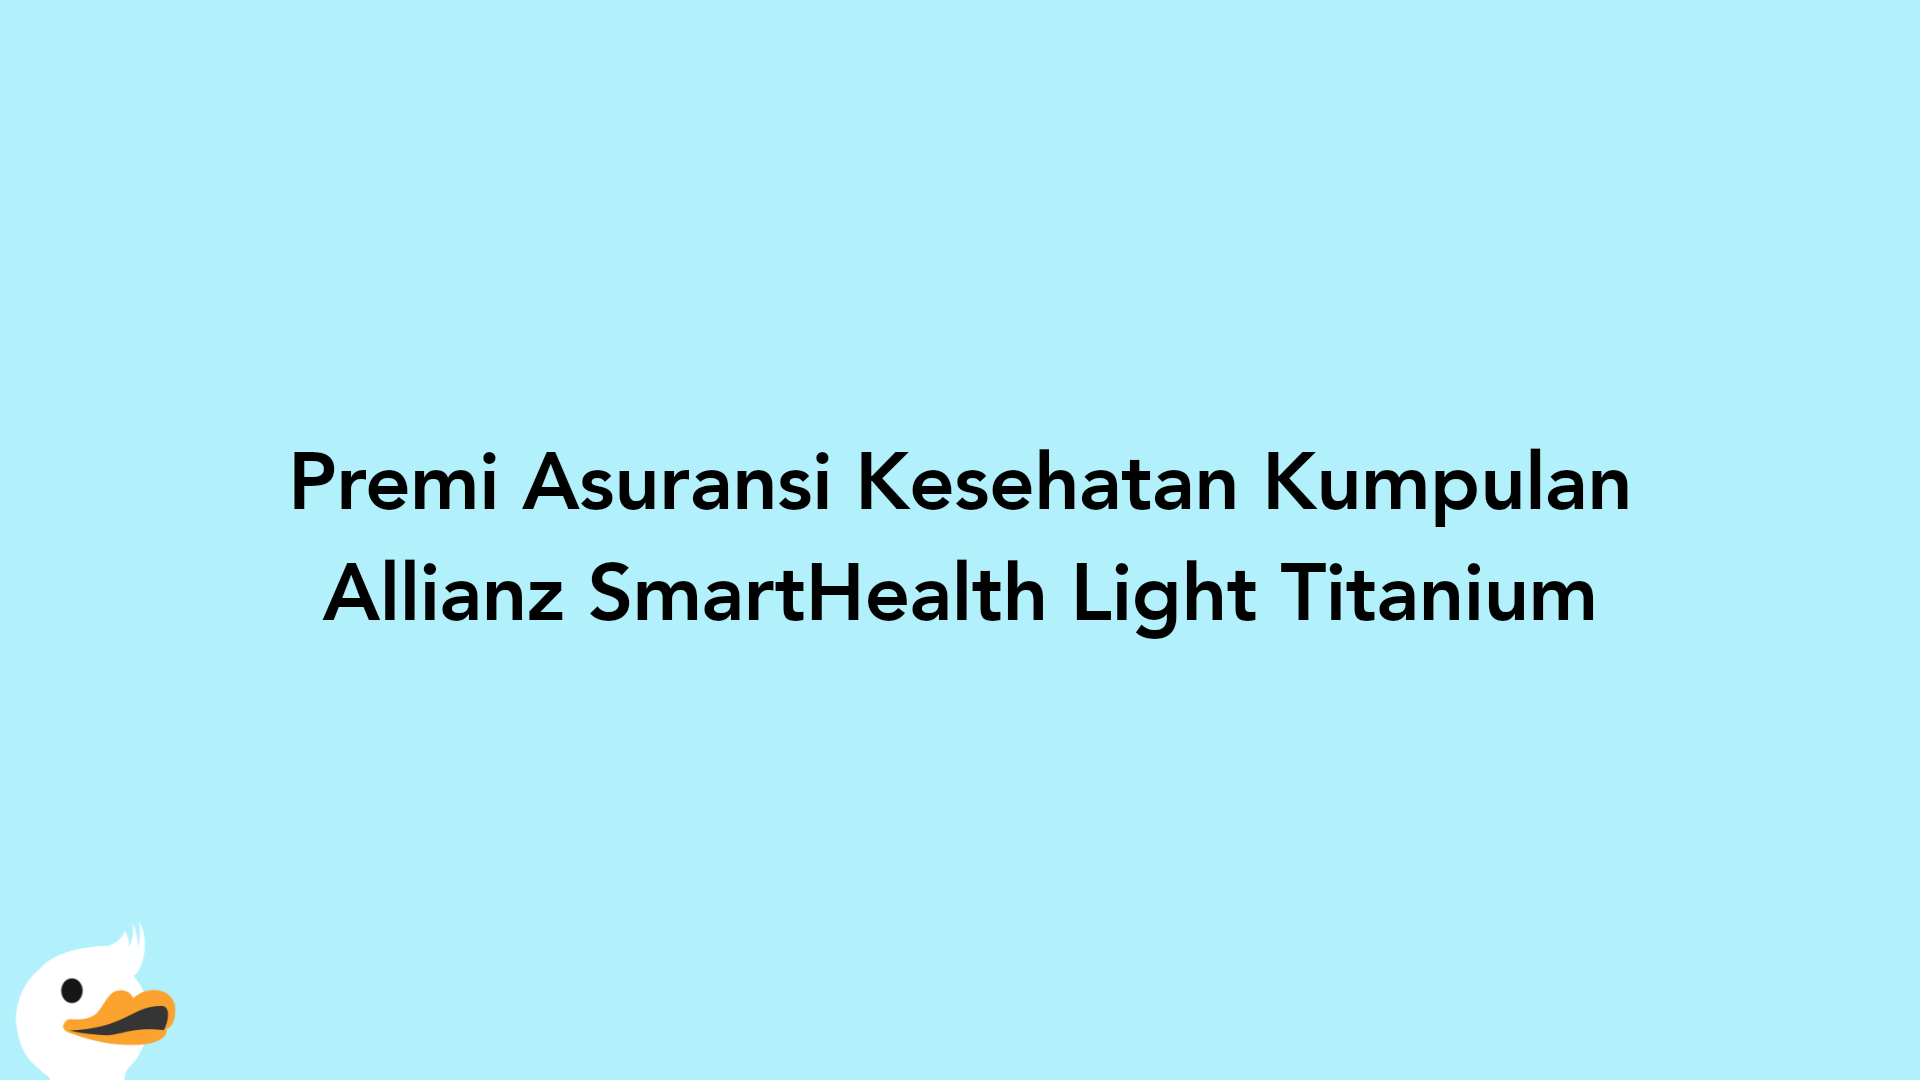 Premi Asuransi Kesehatan Kumpulan Allianz SmartHealth Light Titanium